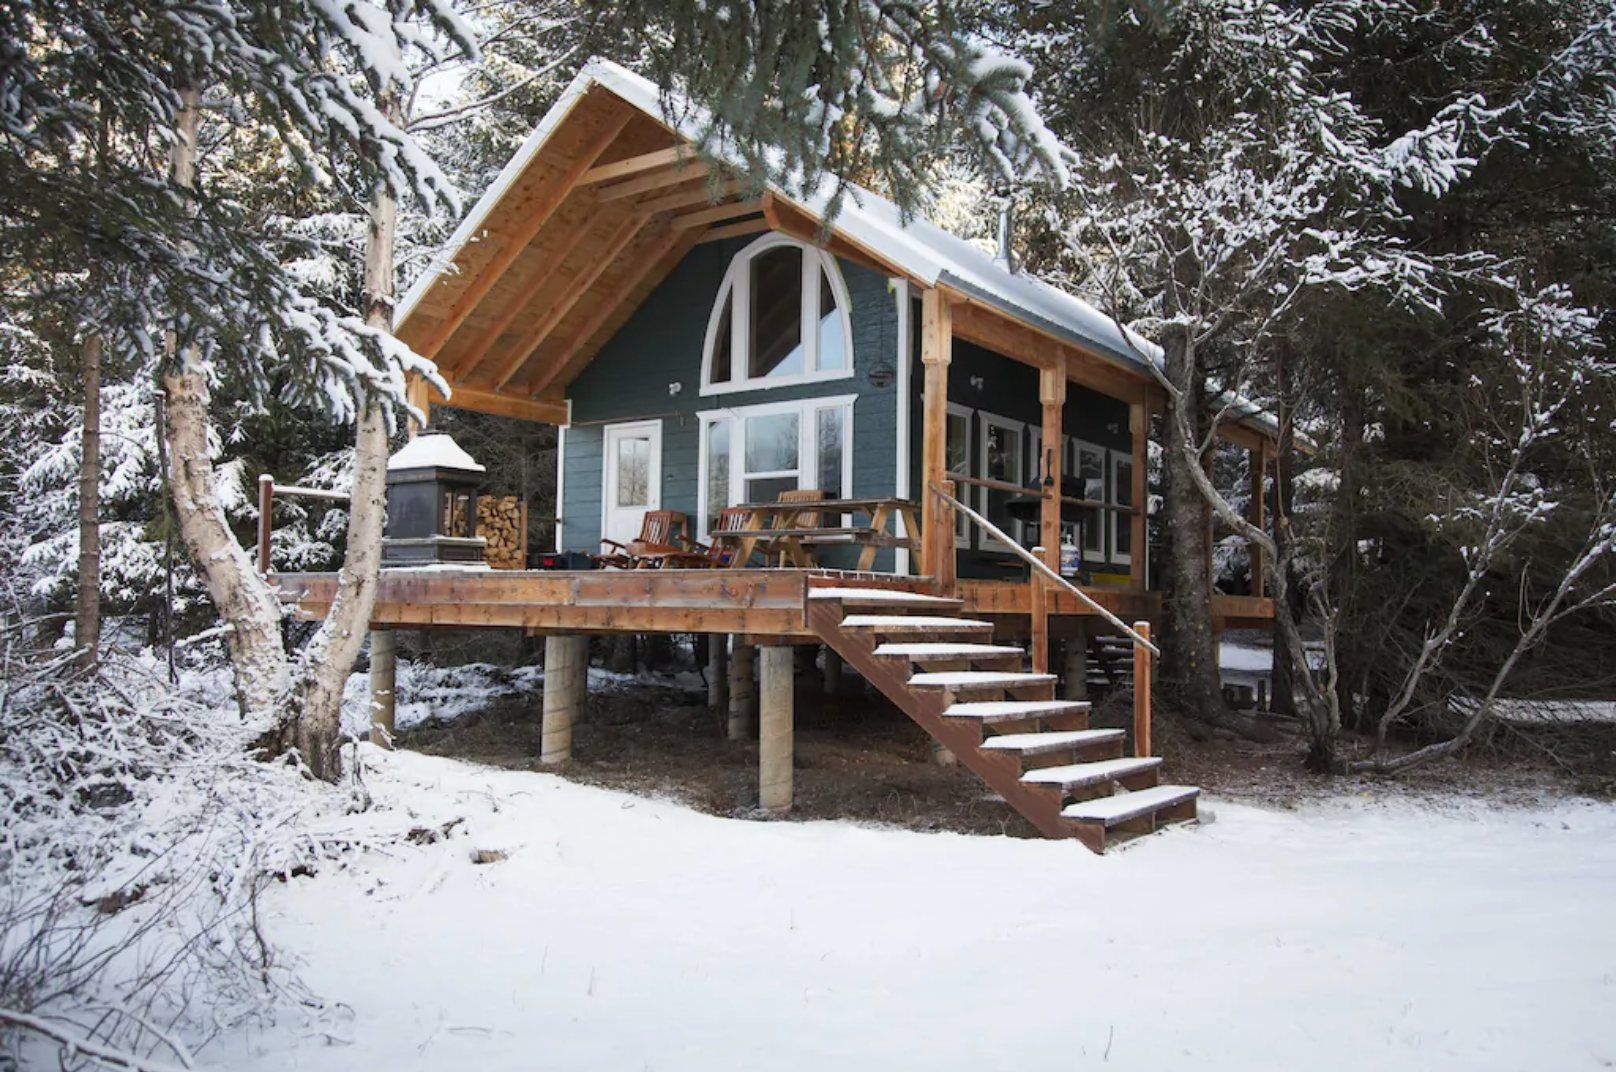 The best Airbnbs in Alaska